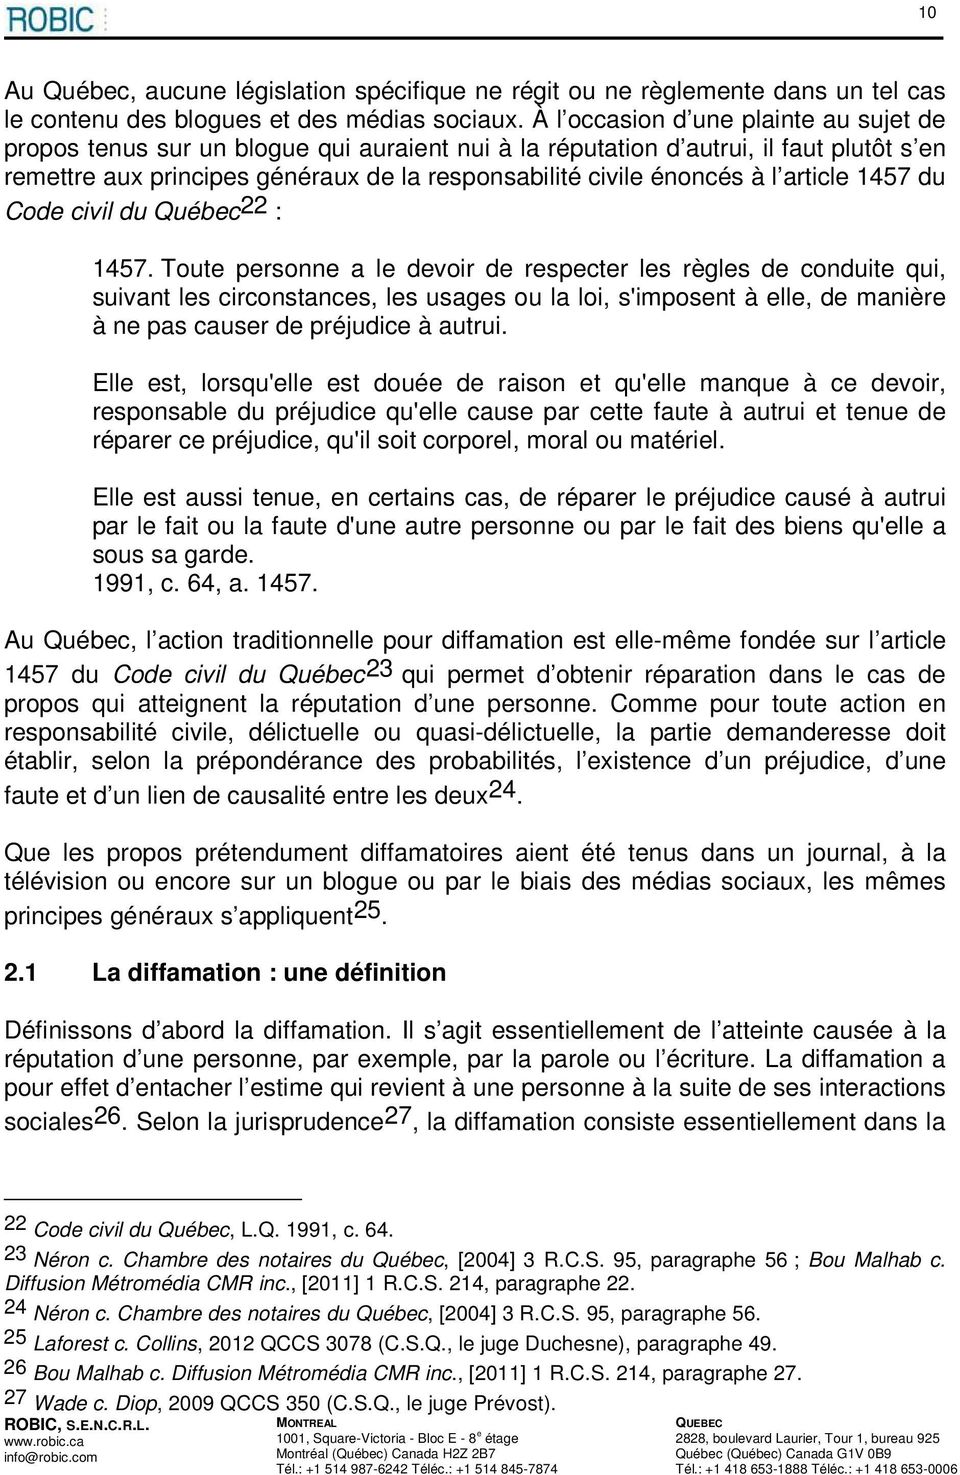 l article 1457 du Code civil du Québec22 : 1457.